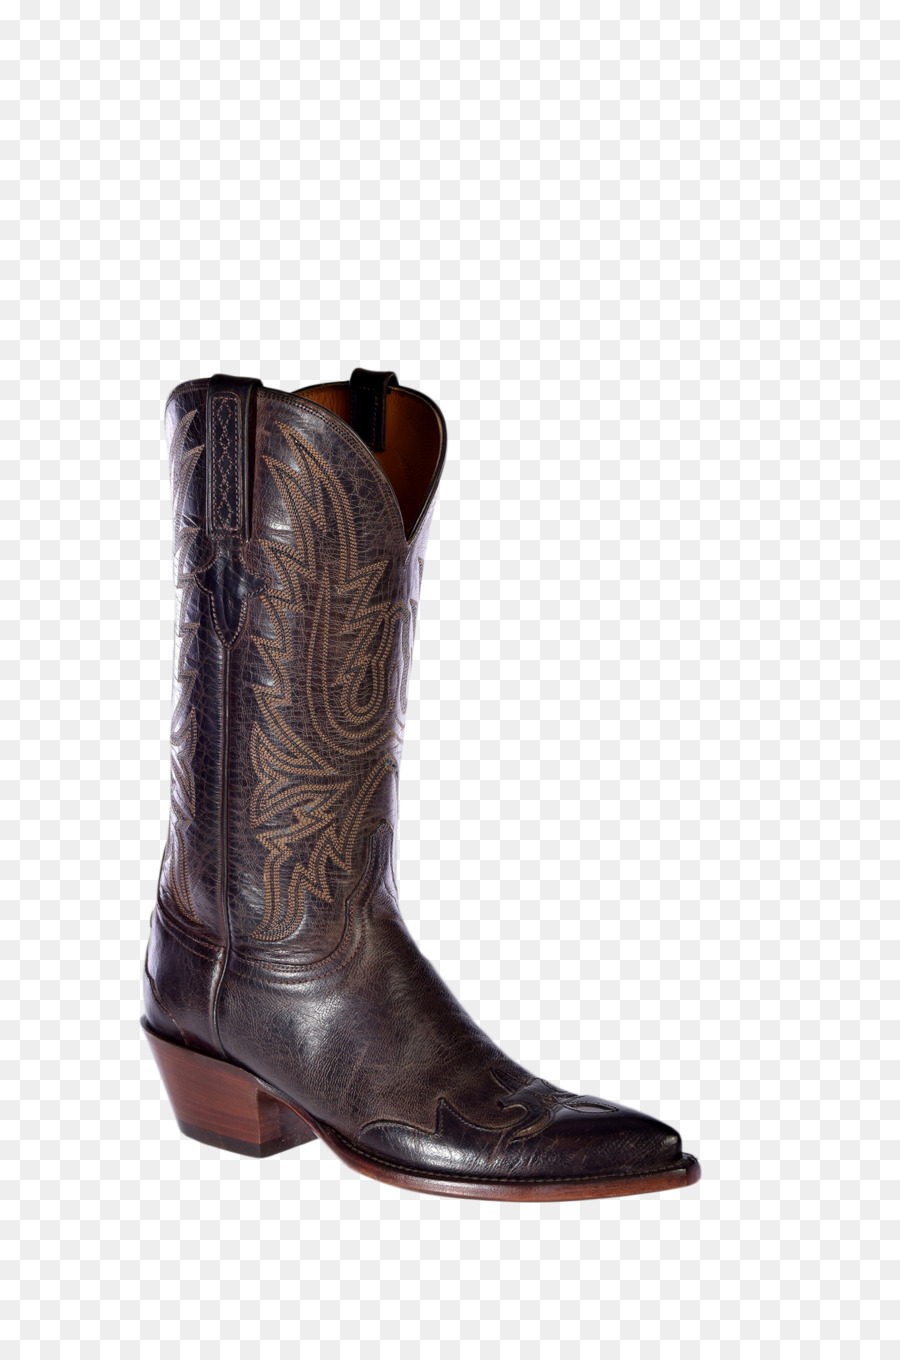 Free PNG HD Cowboy Boots - 151356